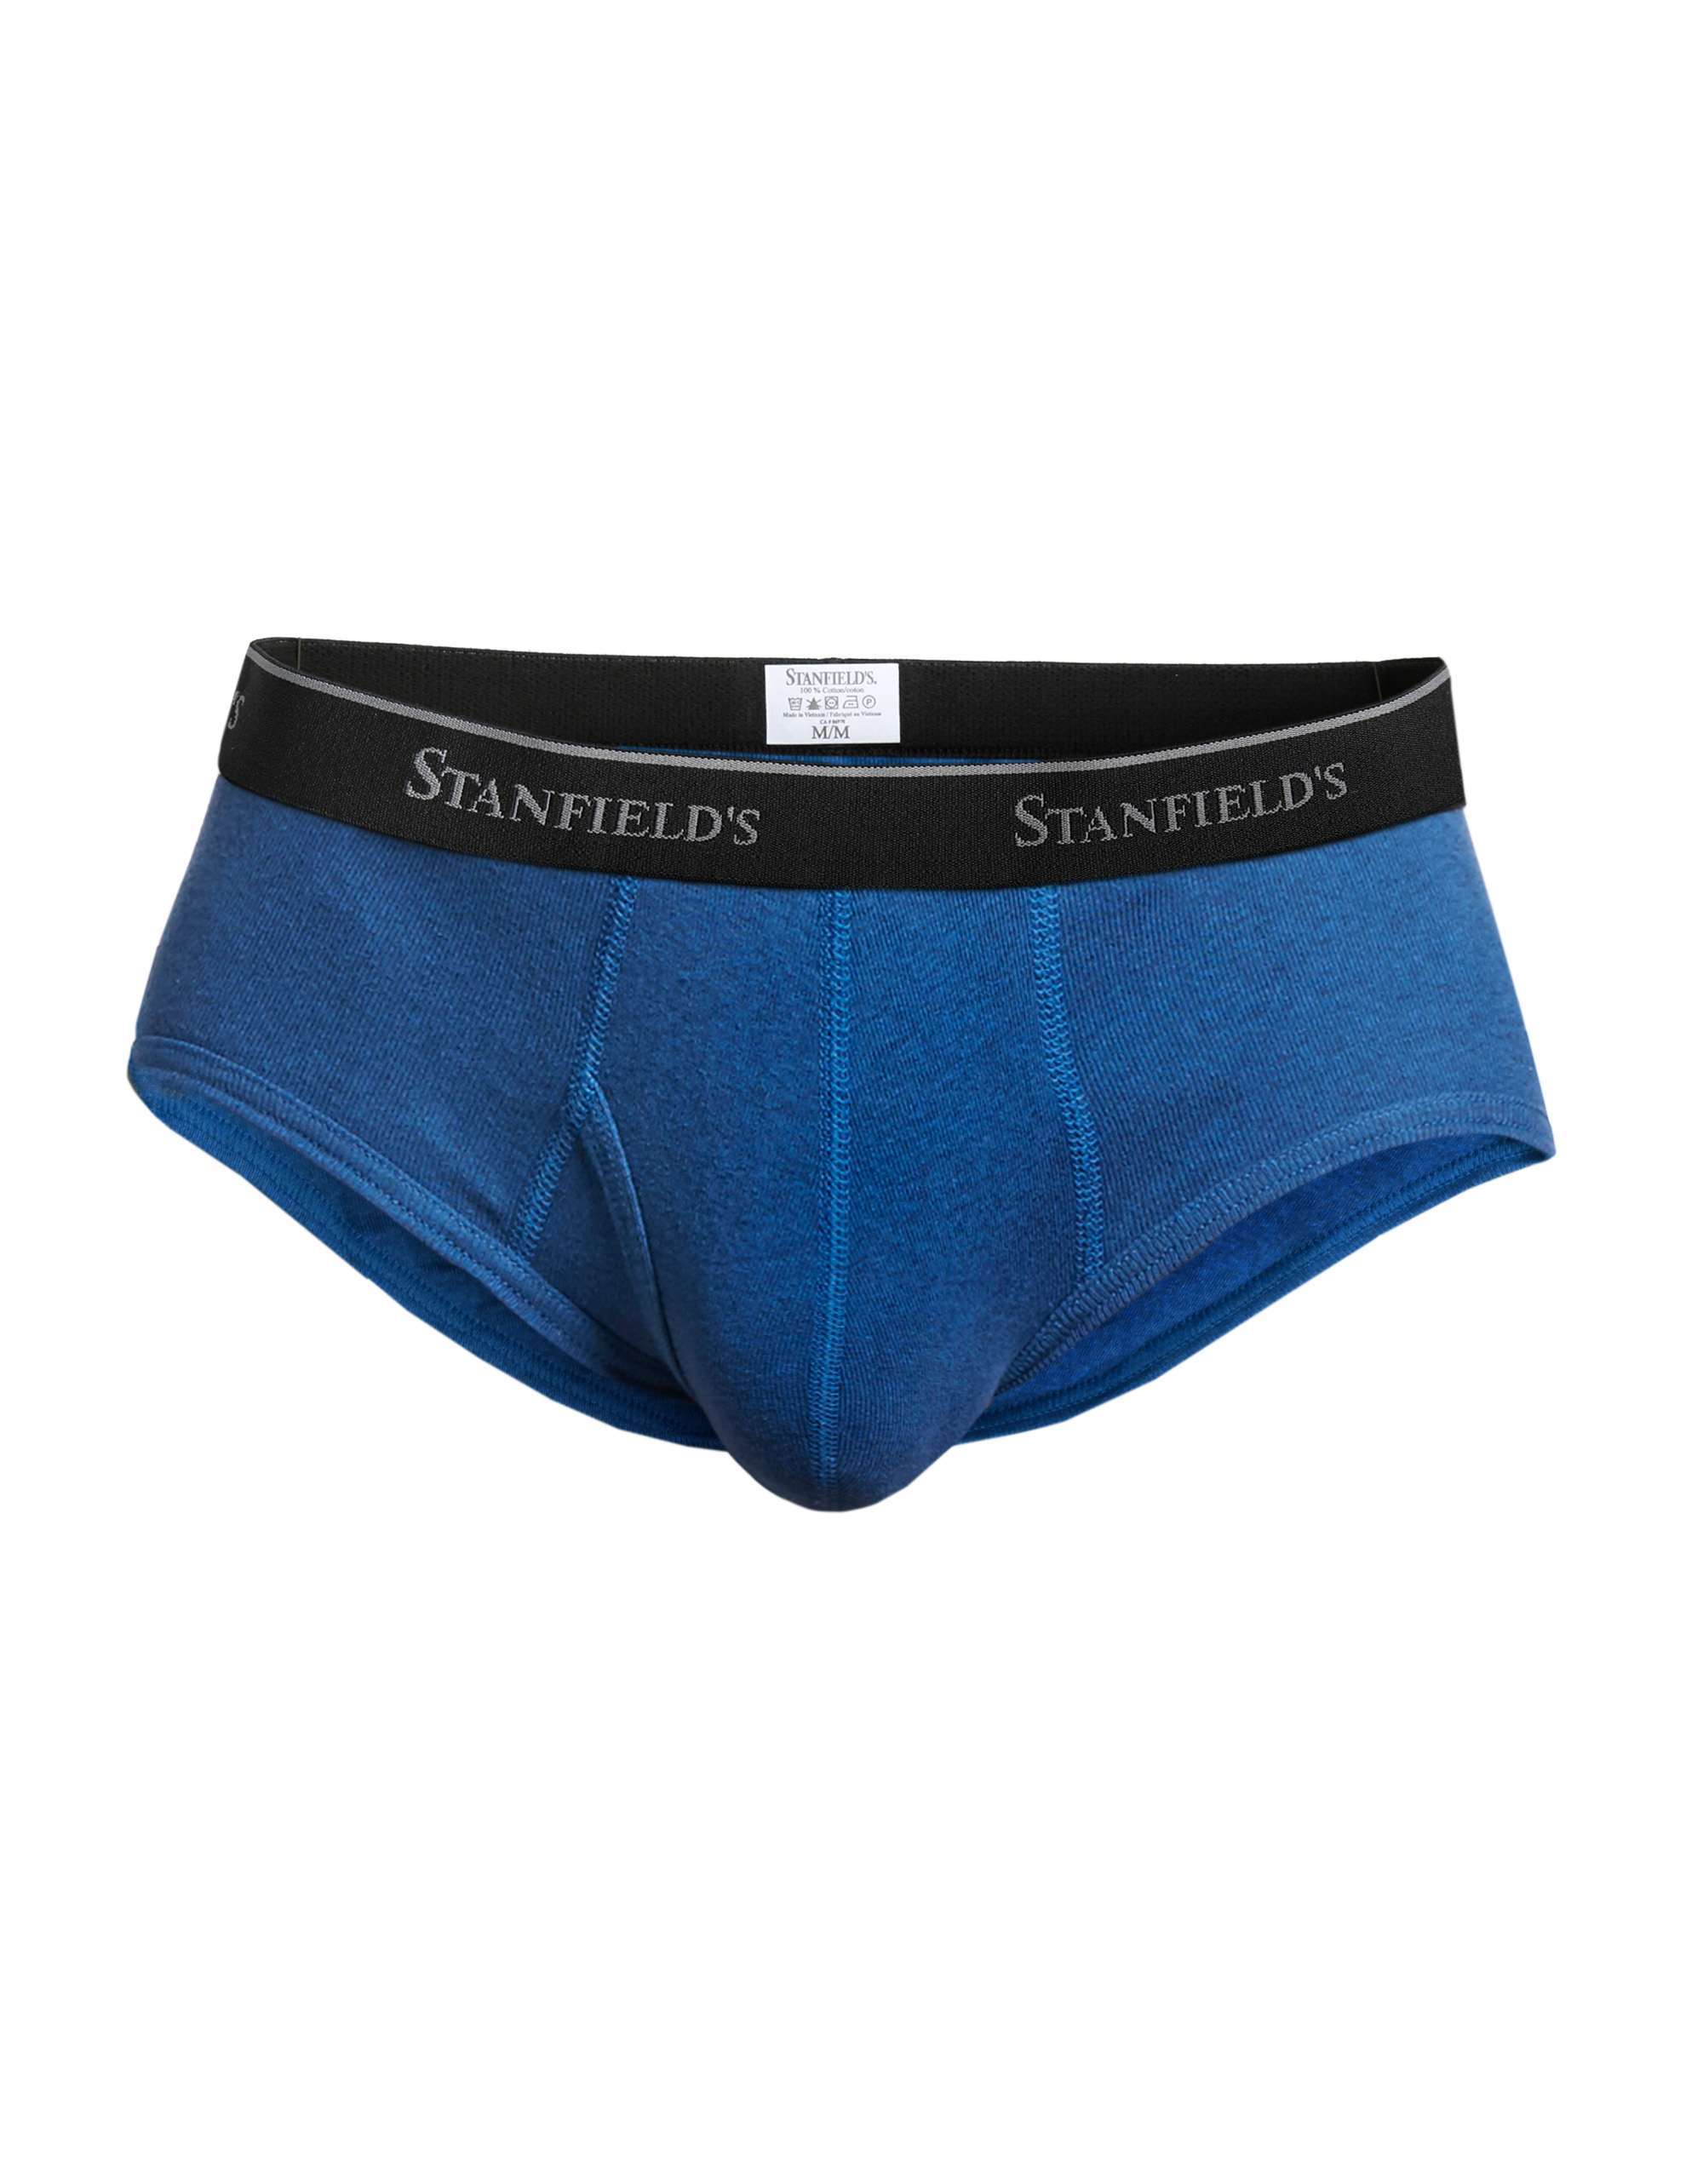 Stanfield's Men's 2 Pack Premium Cotton Low Rise Briefs Underwear ...